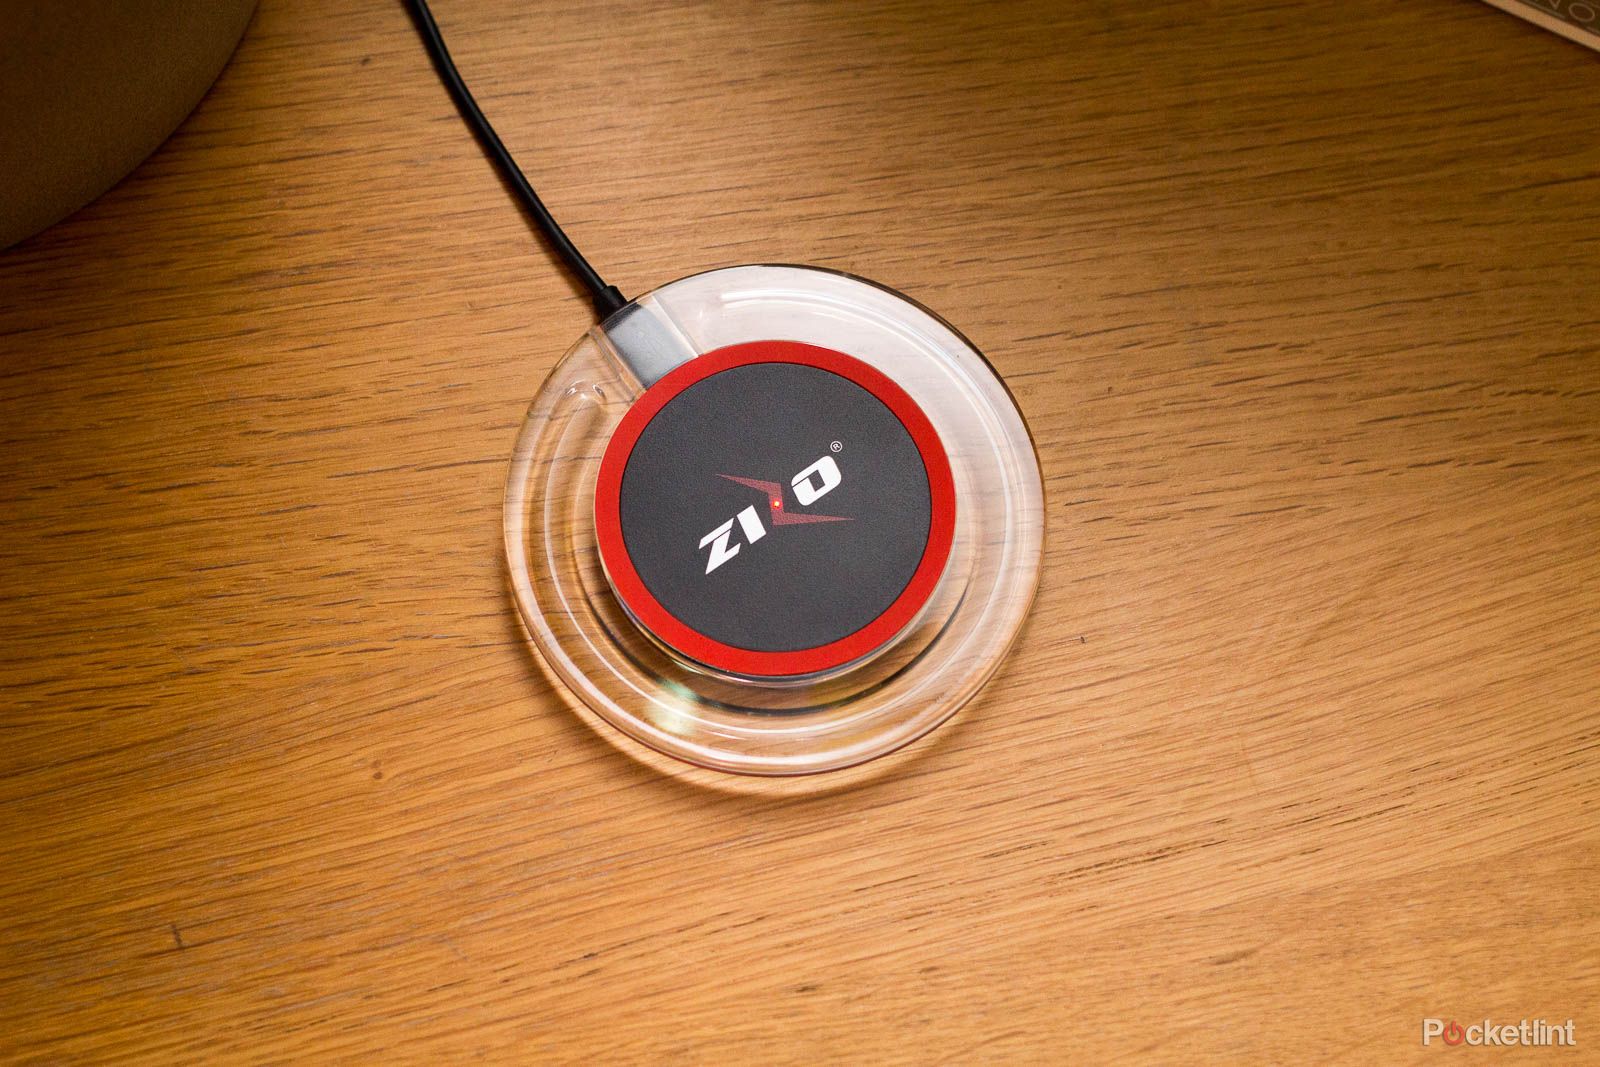 Zizo Wire-free charging pad photos image 4